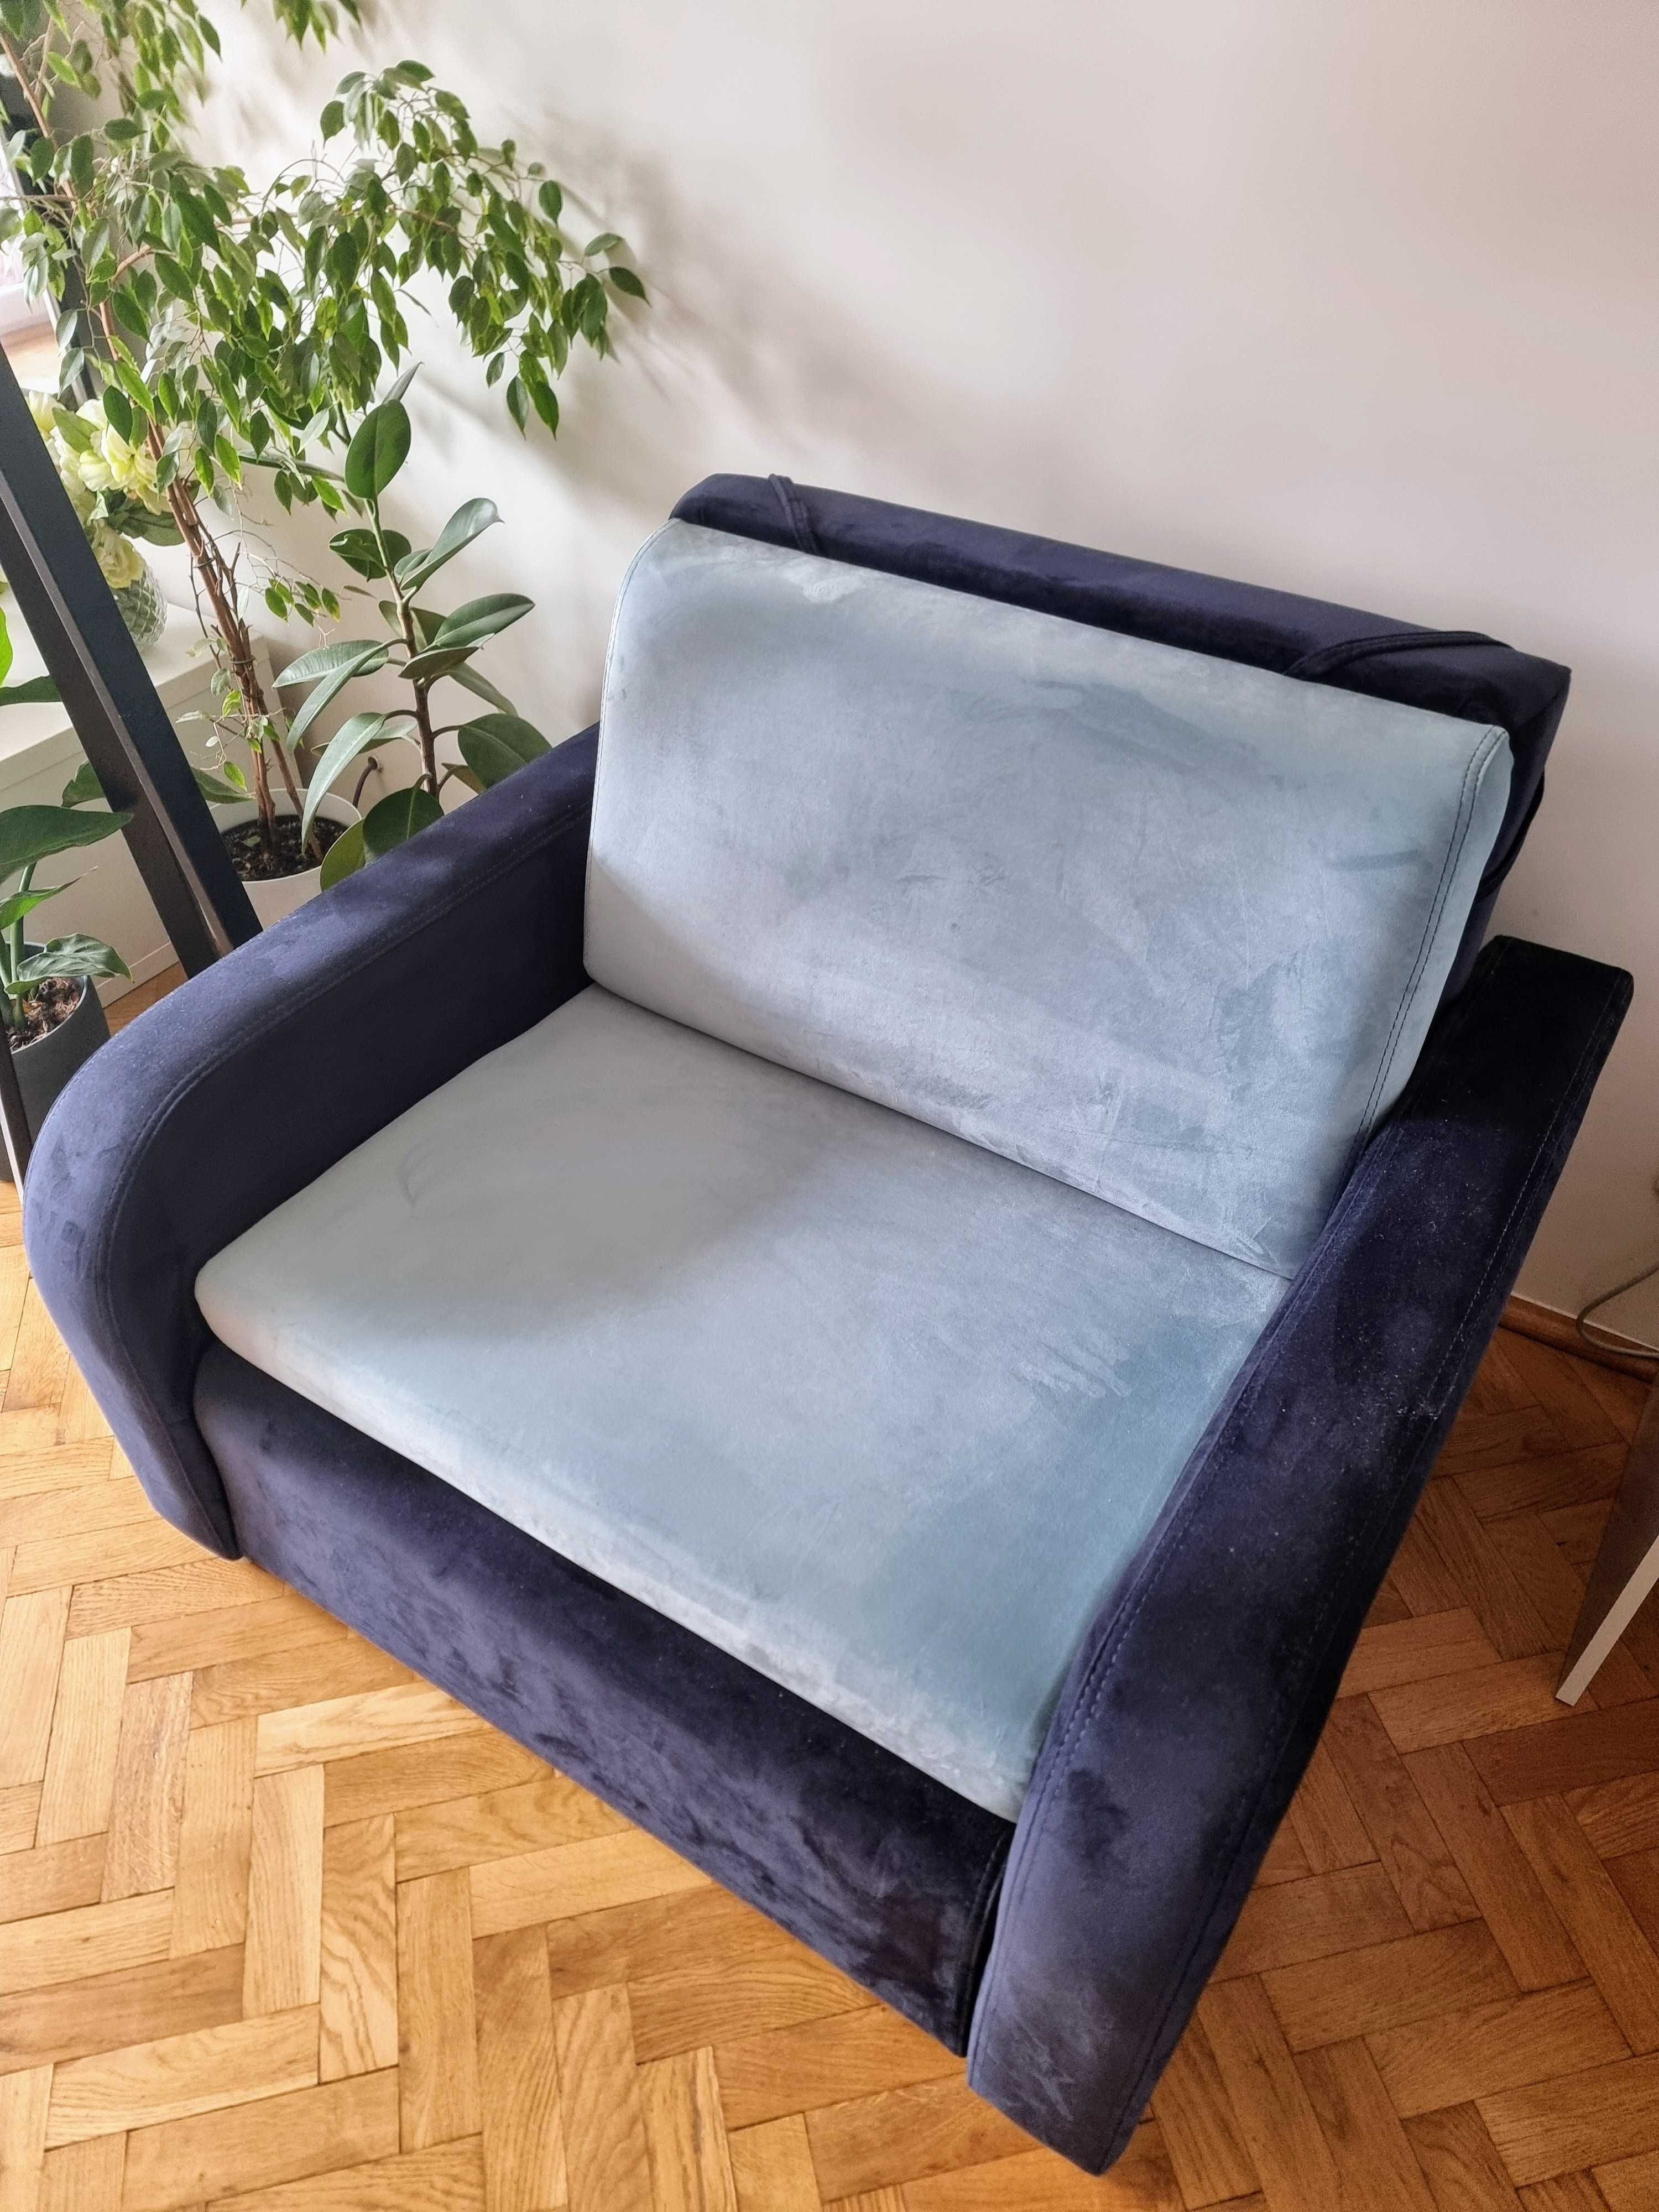 Fotel/sofa 1 osobowa